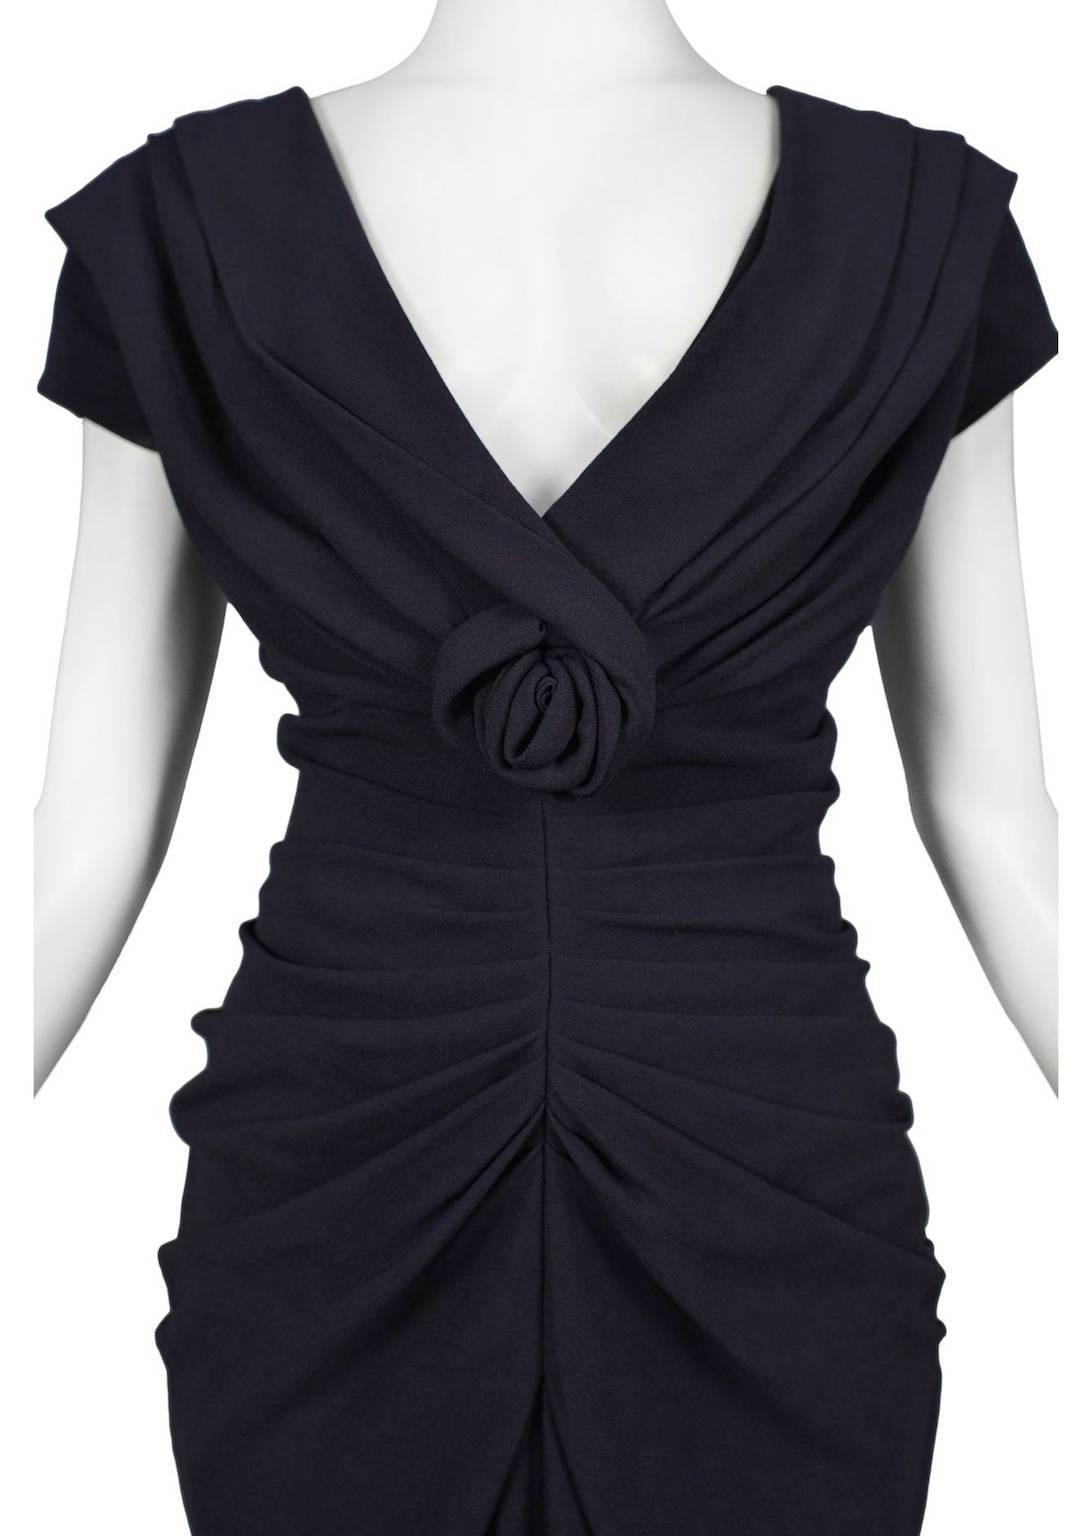 Black John Galliano for Dior Navy Drape Dress